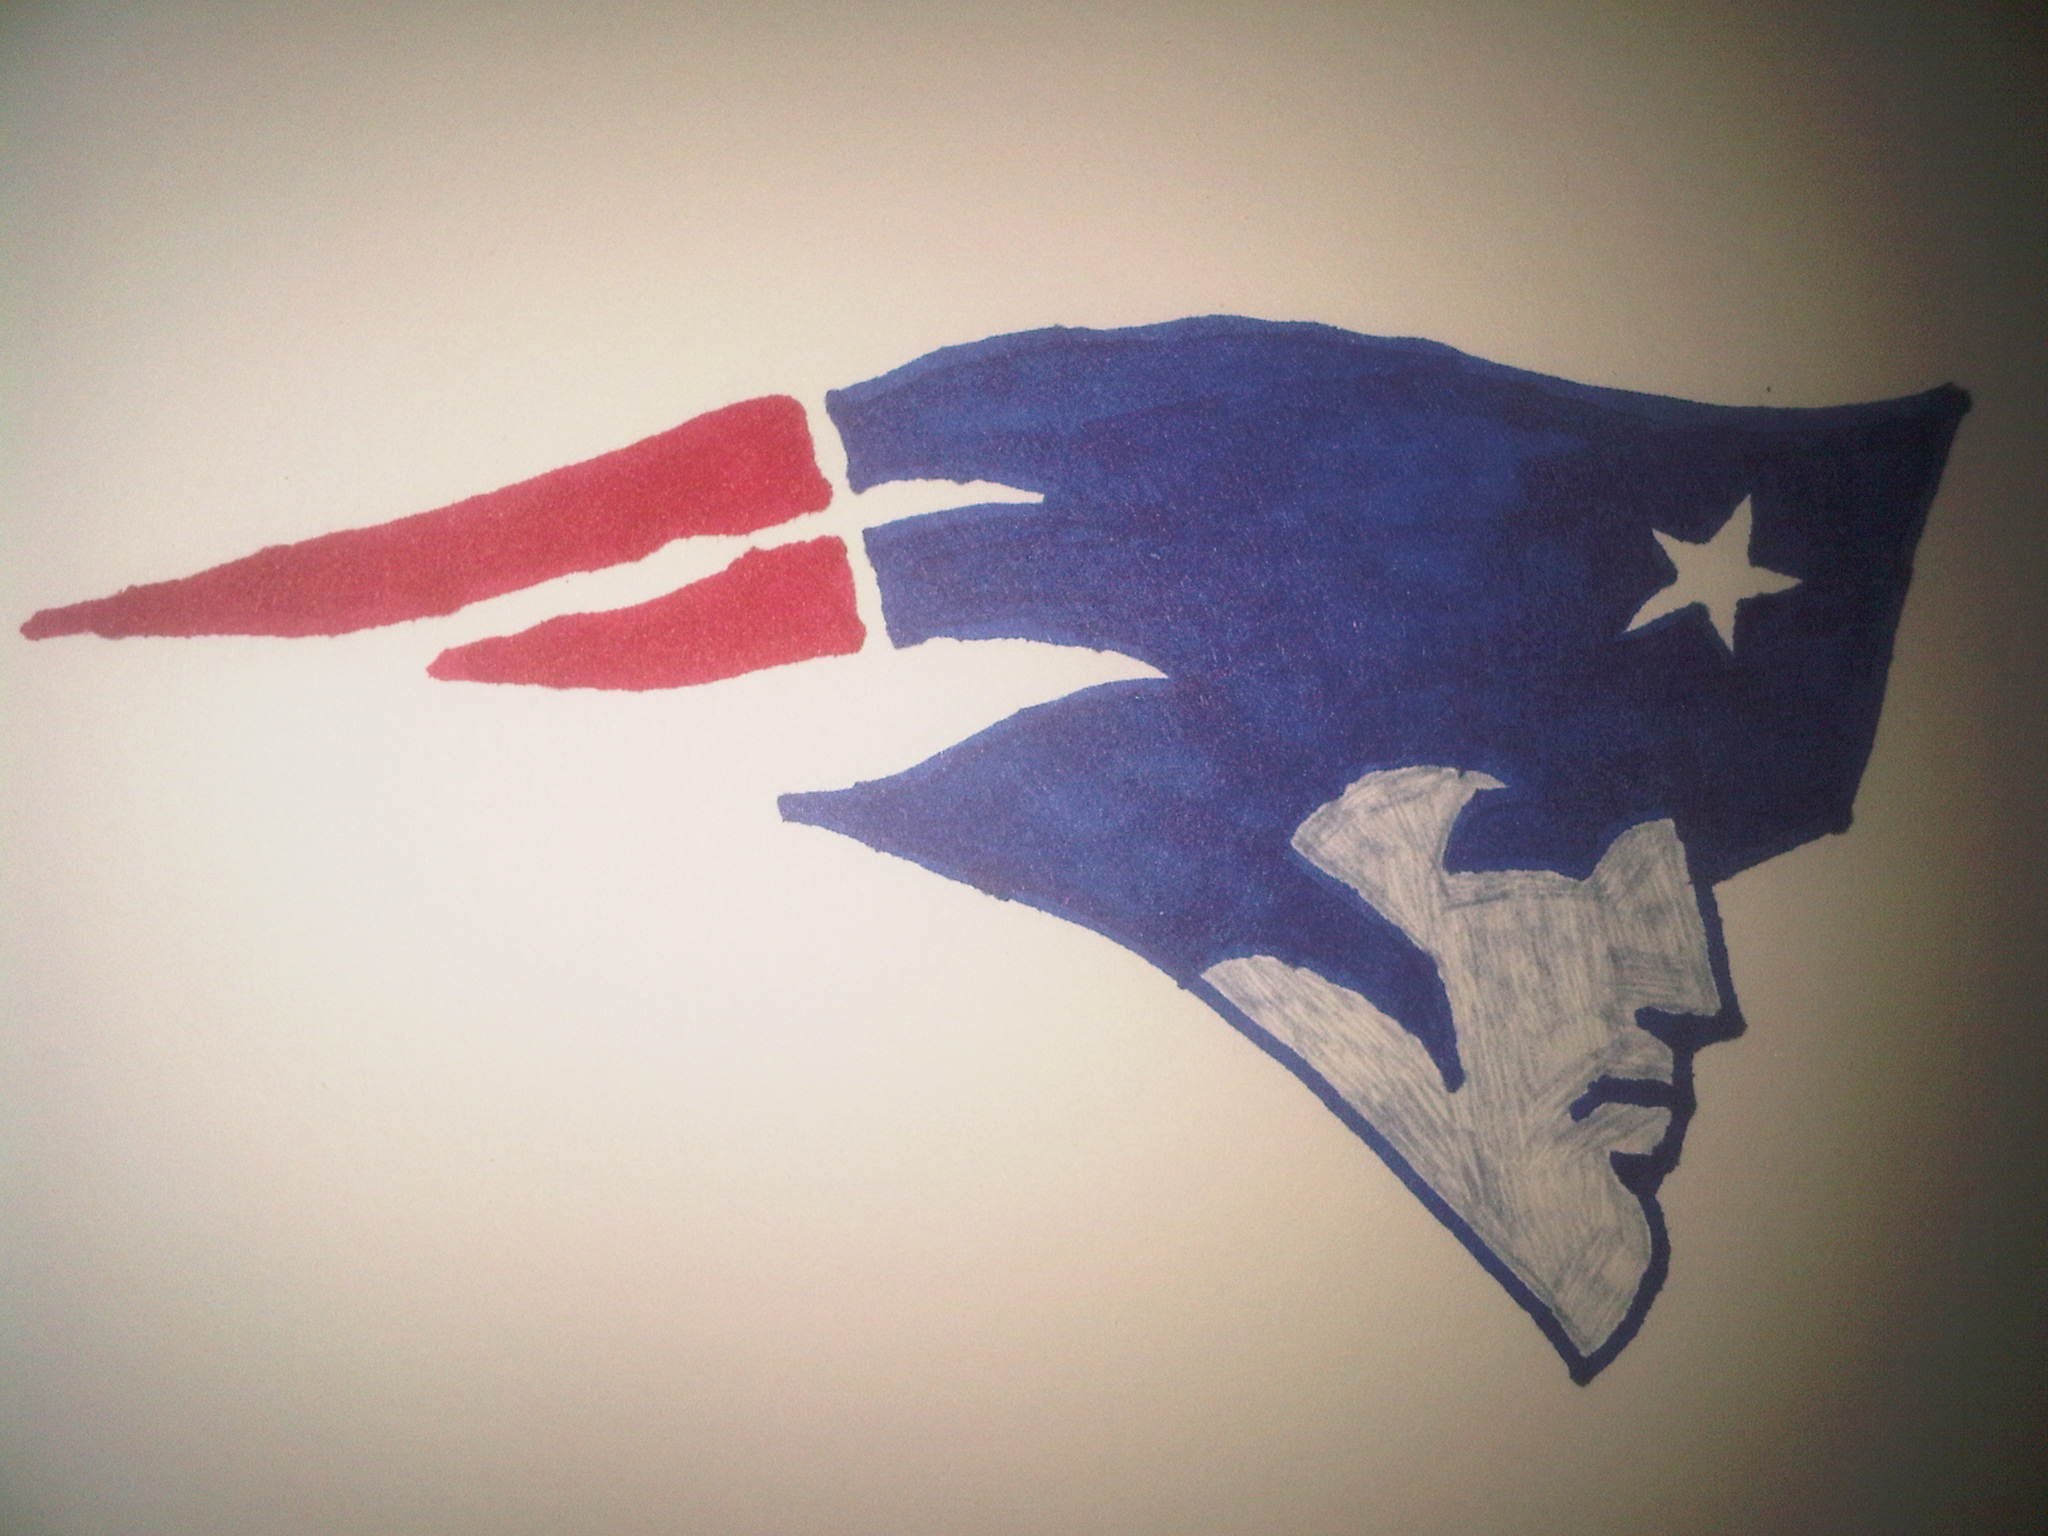 New England Patriots Logo Wallpaper (72+ images)